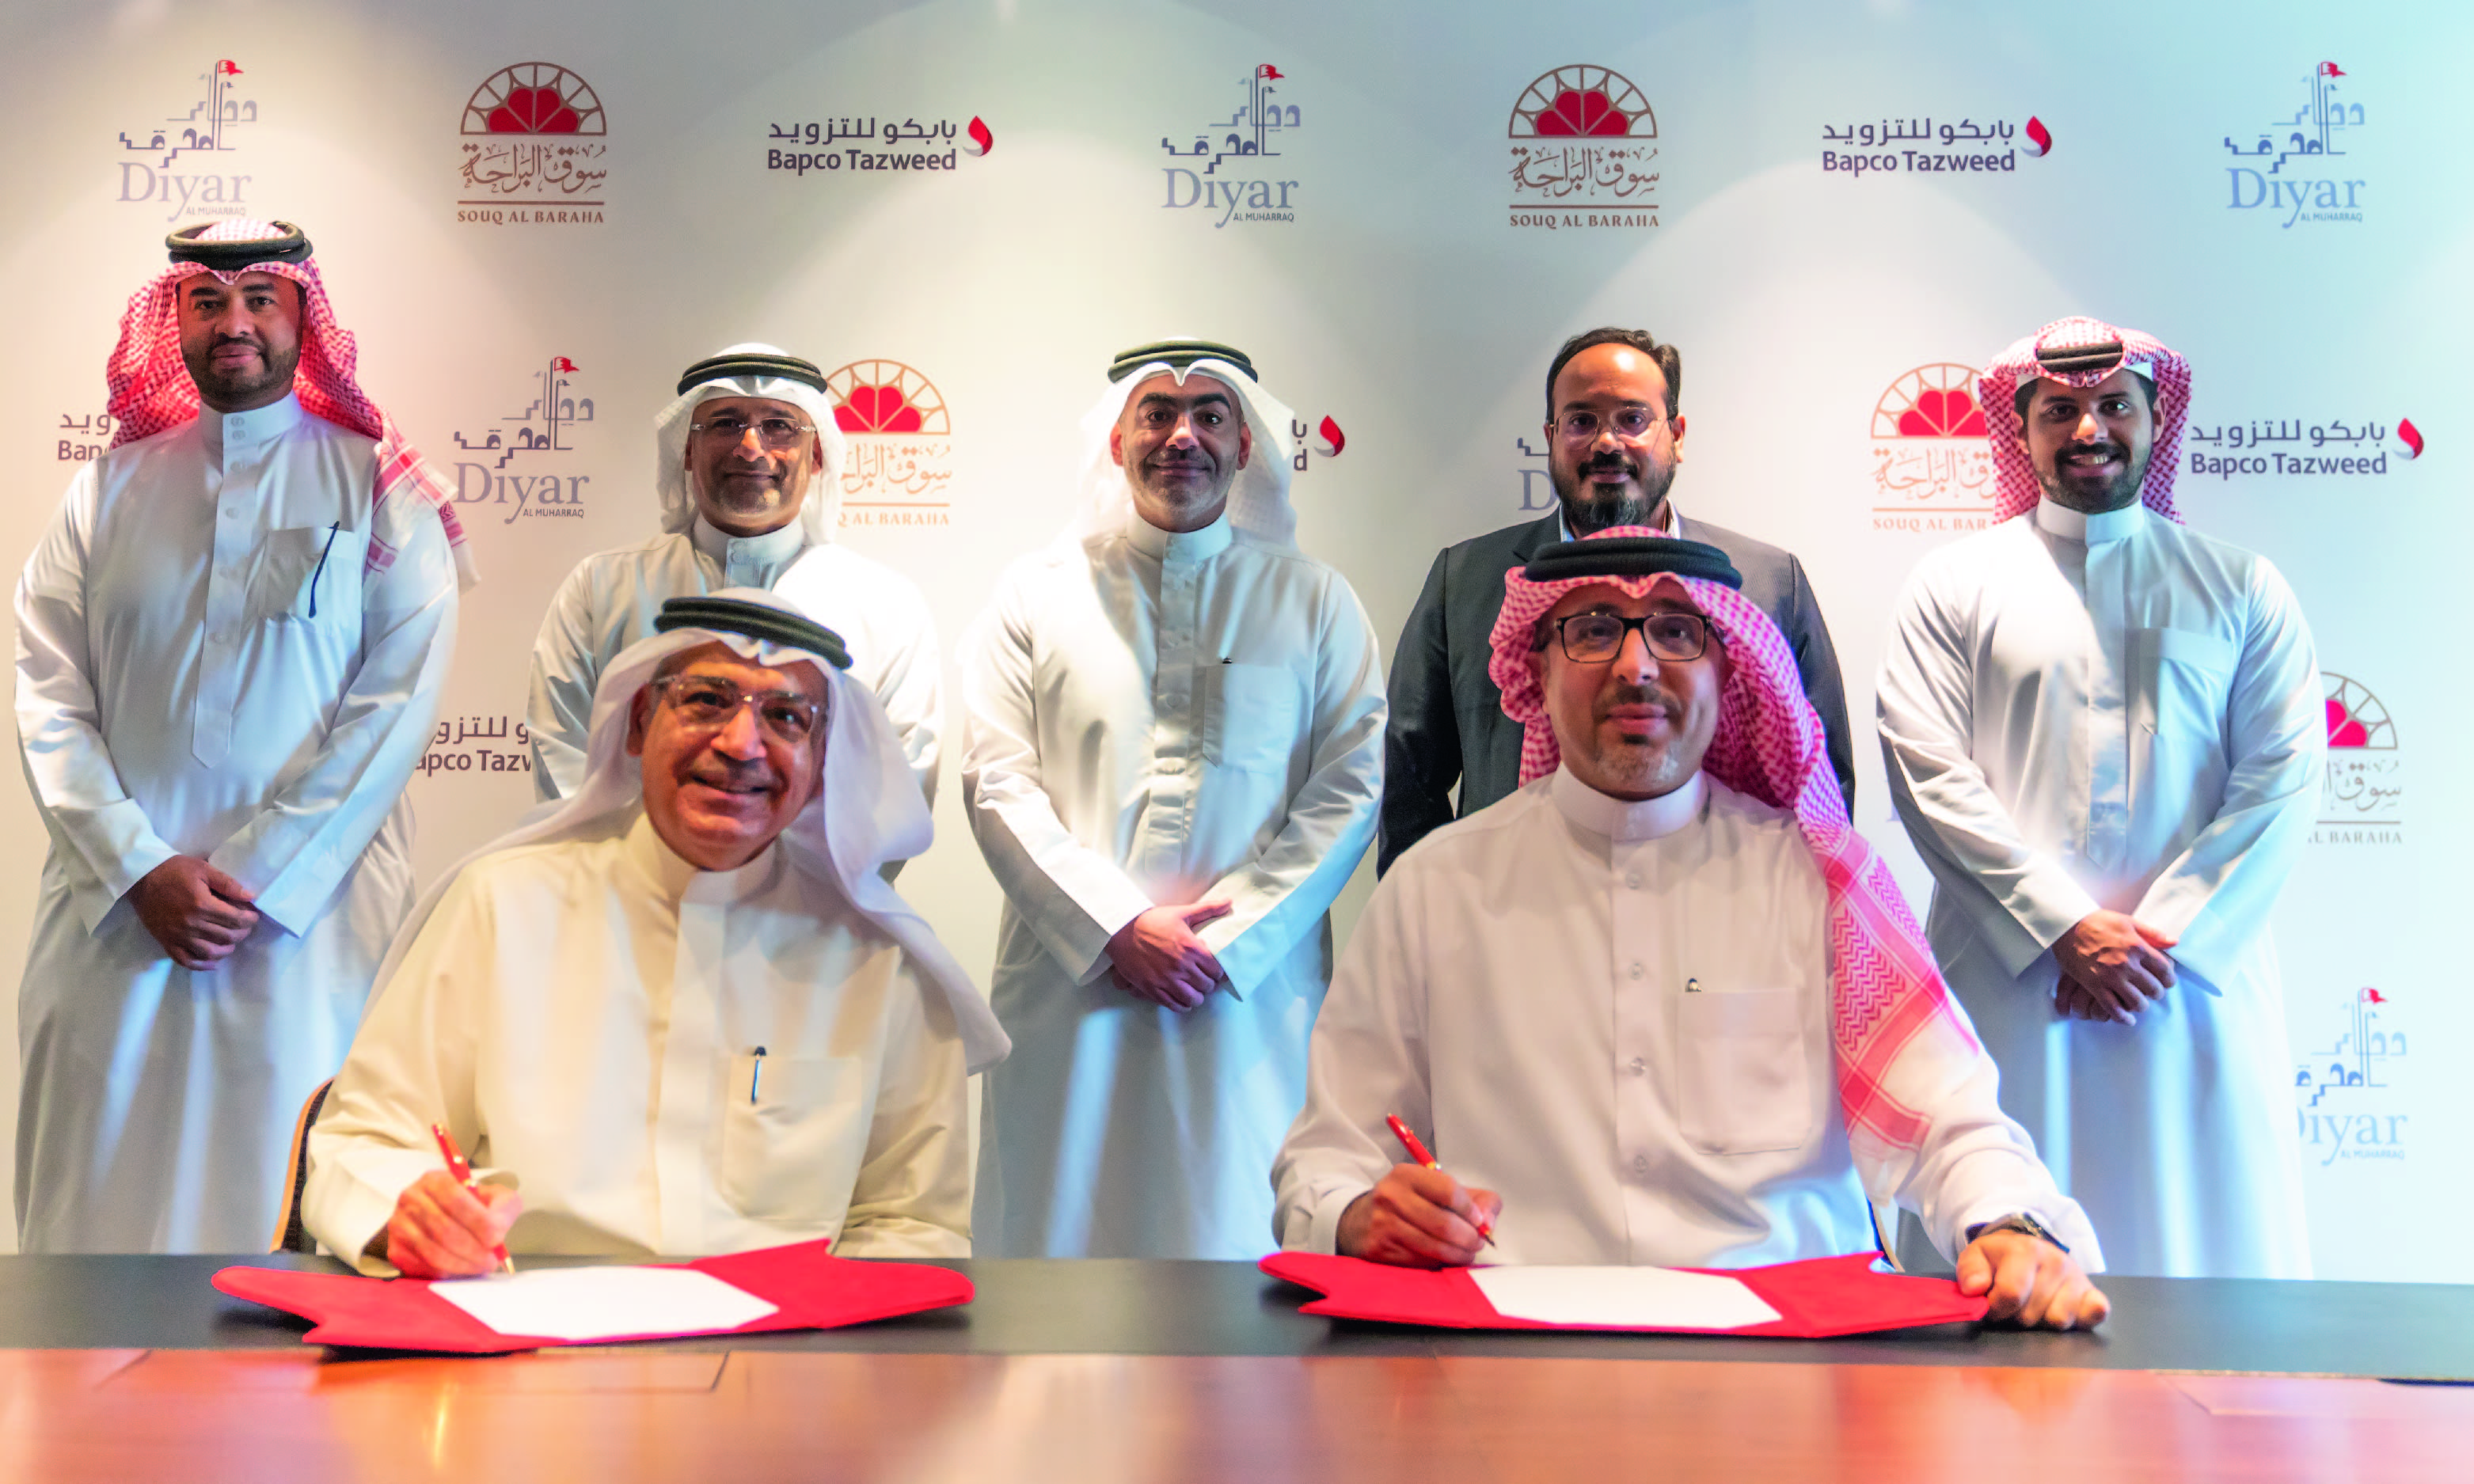 Souq Al Baraha Signs Agreement with Bapco Tazweed to Build Diyar Al Muharraq’s First Petrol Station